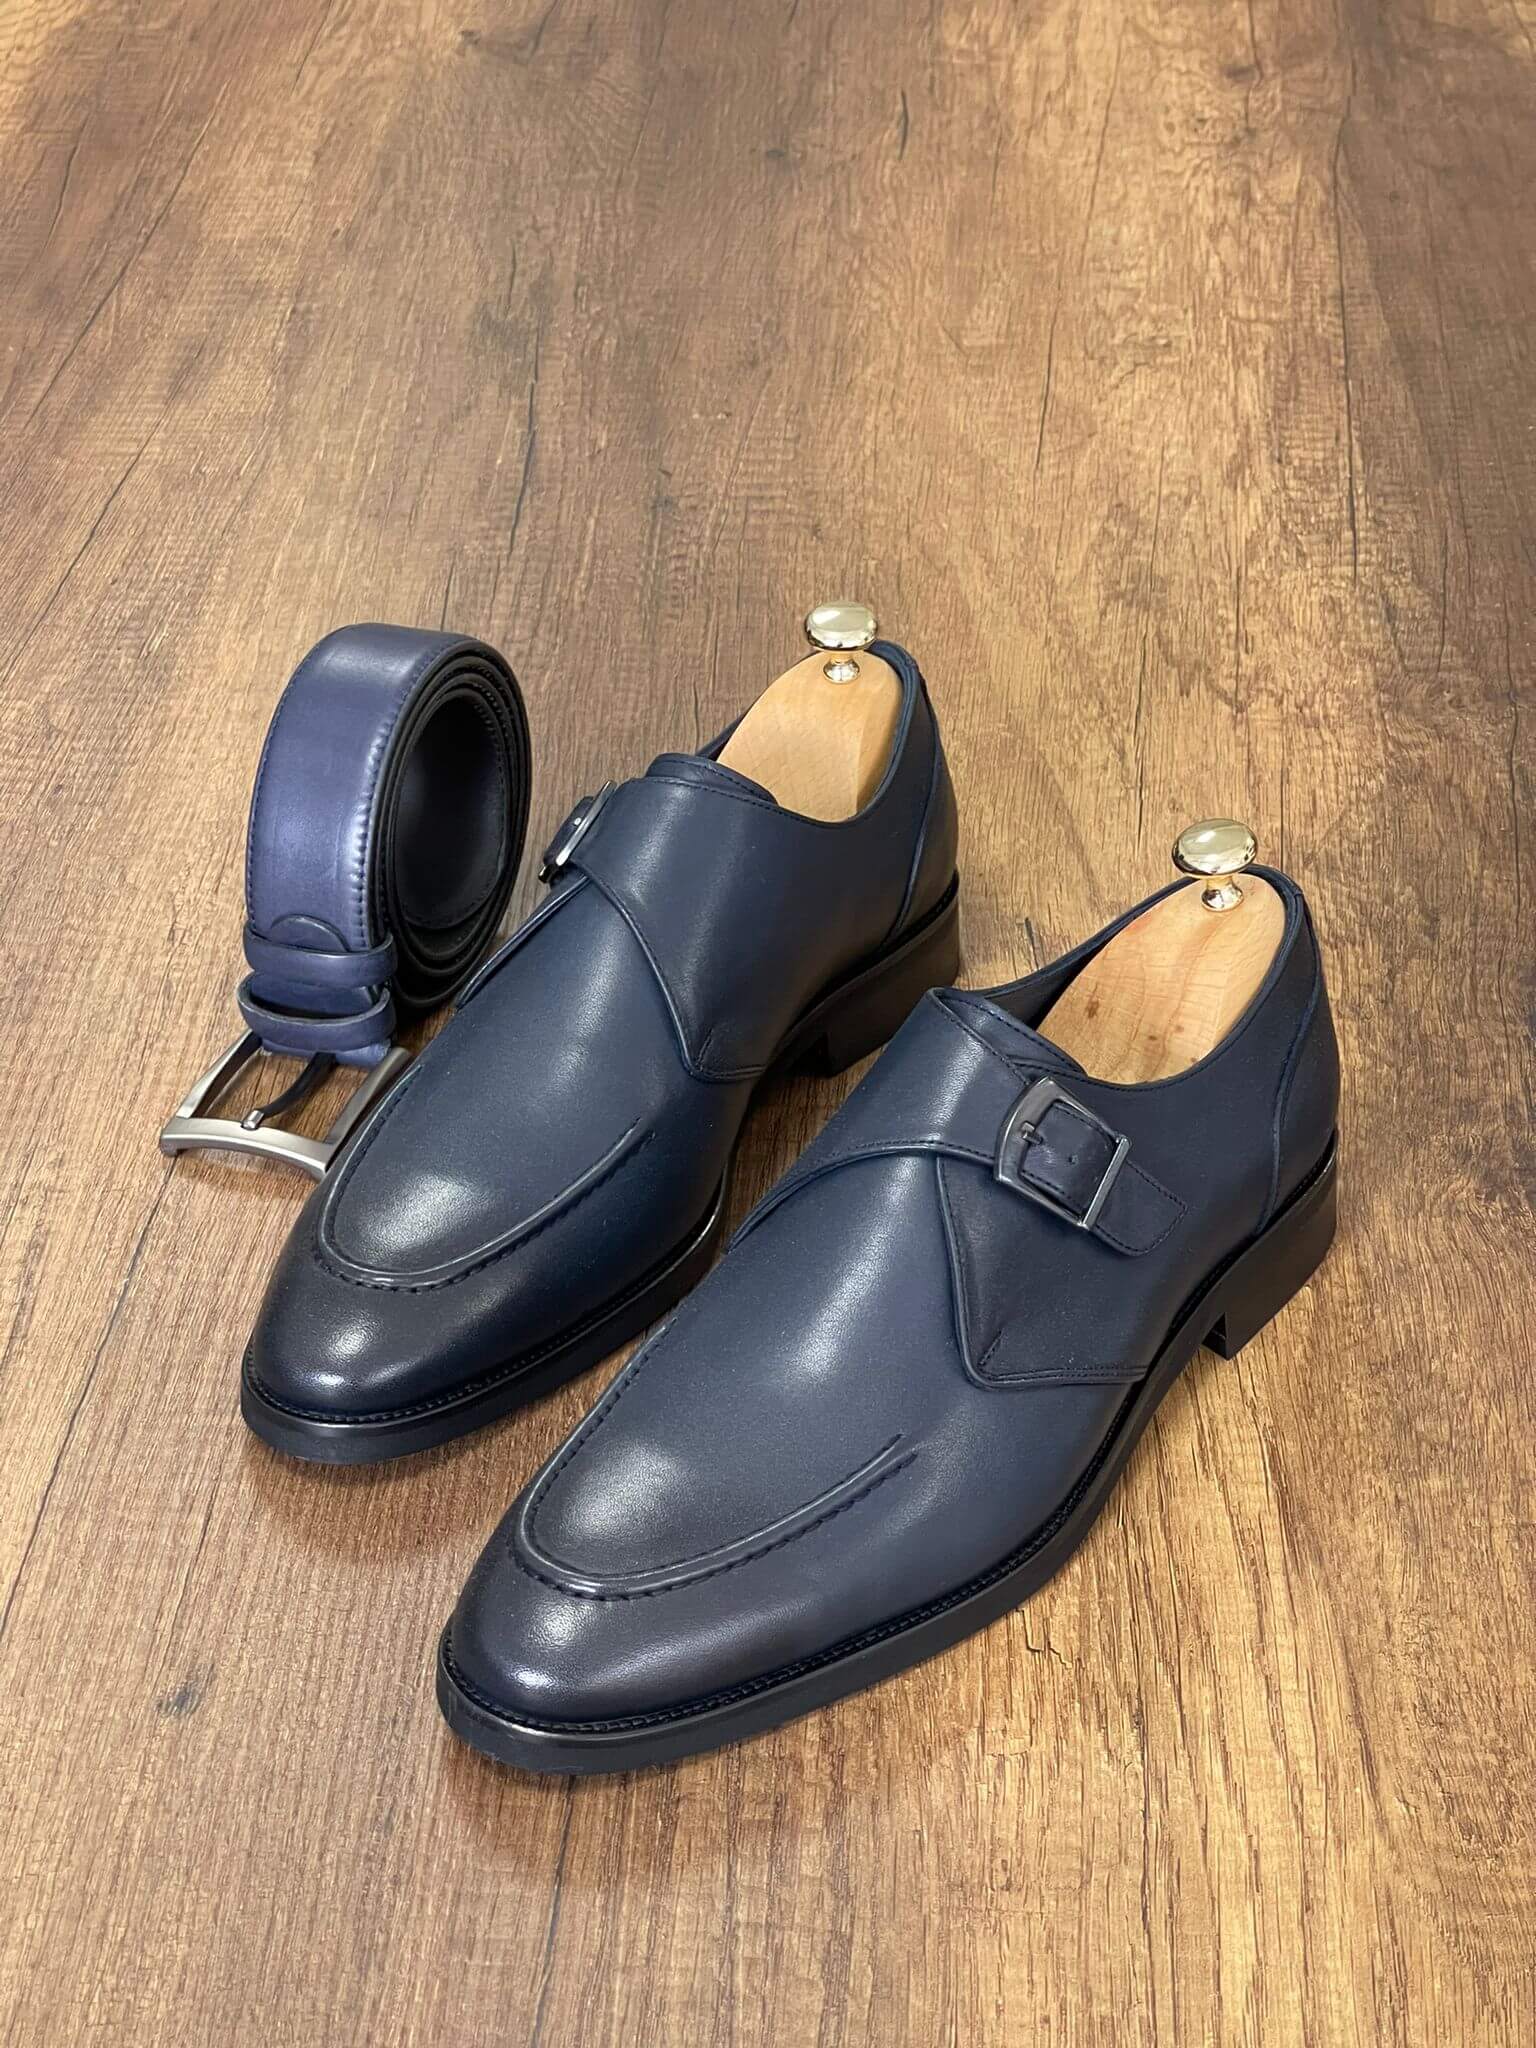 HolloMen Navy Blue Classic Leather Shoe